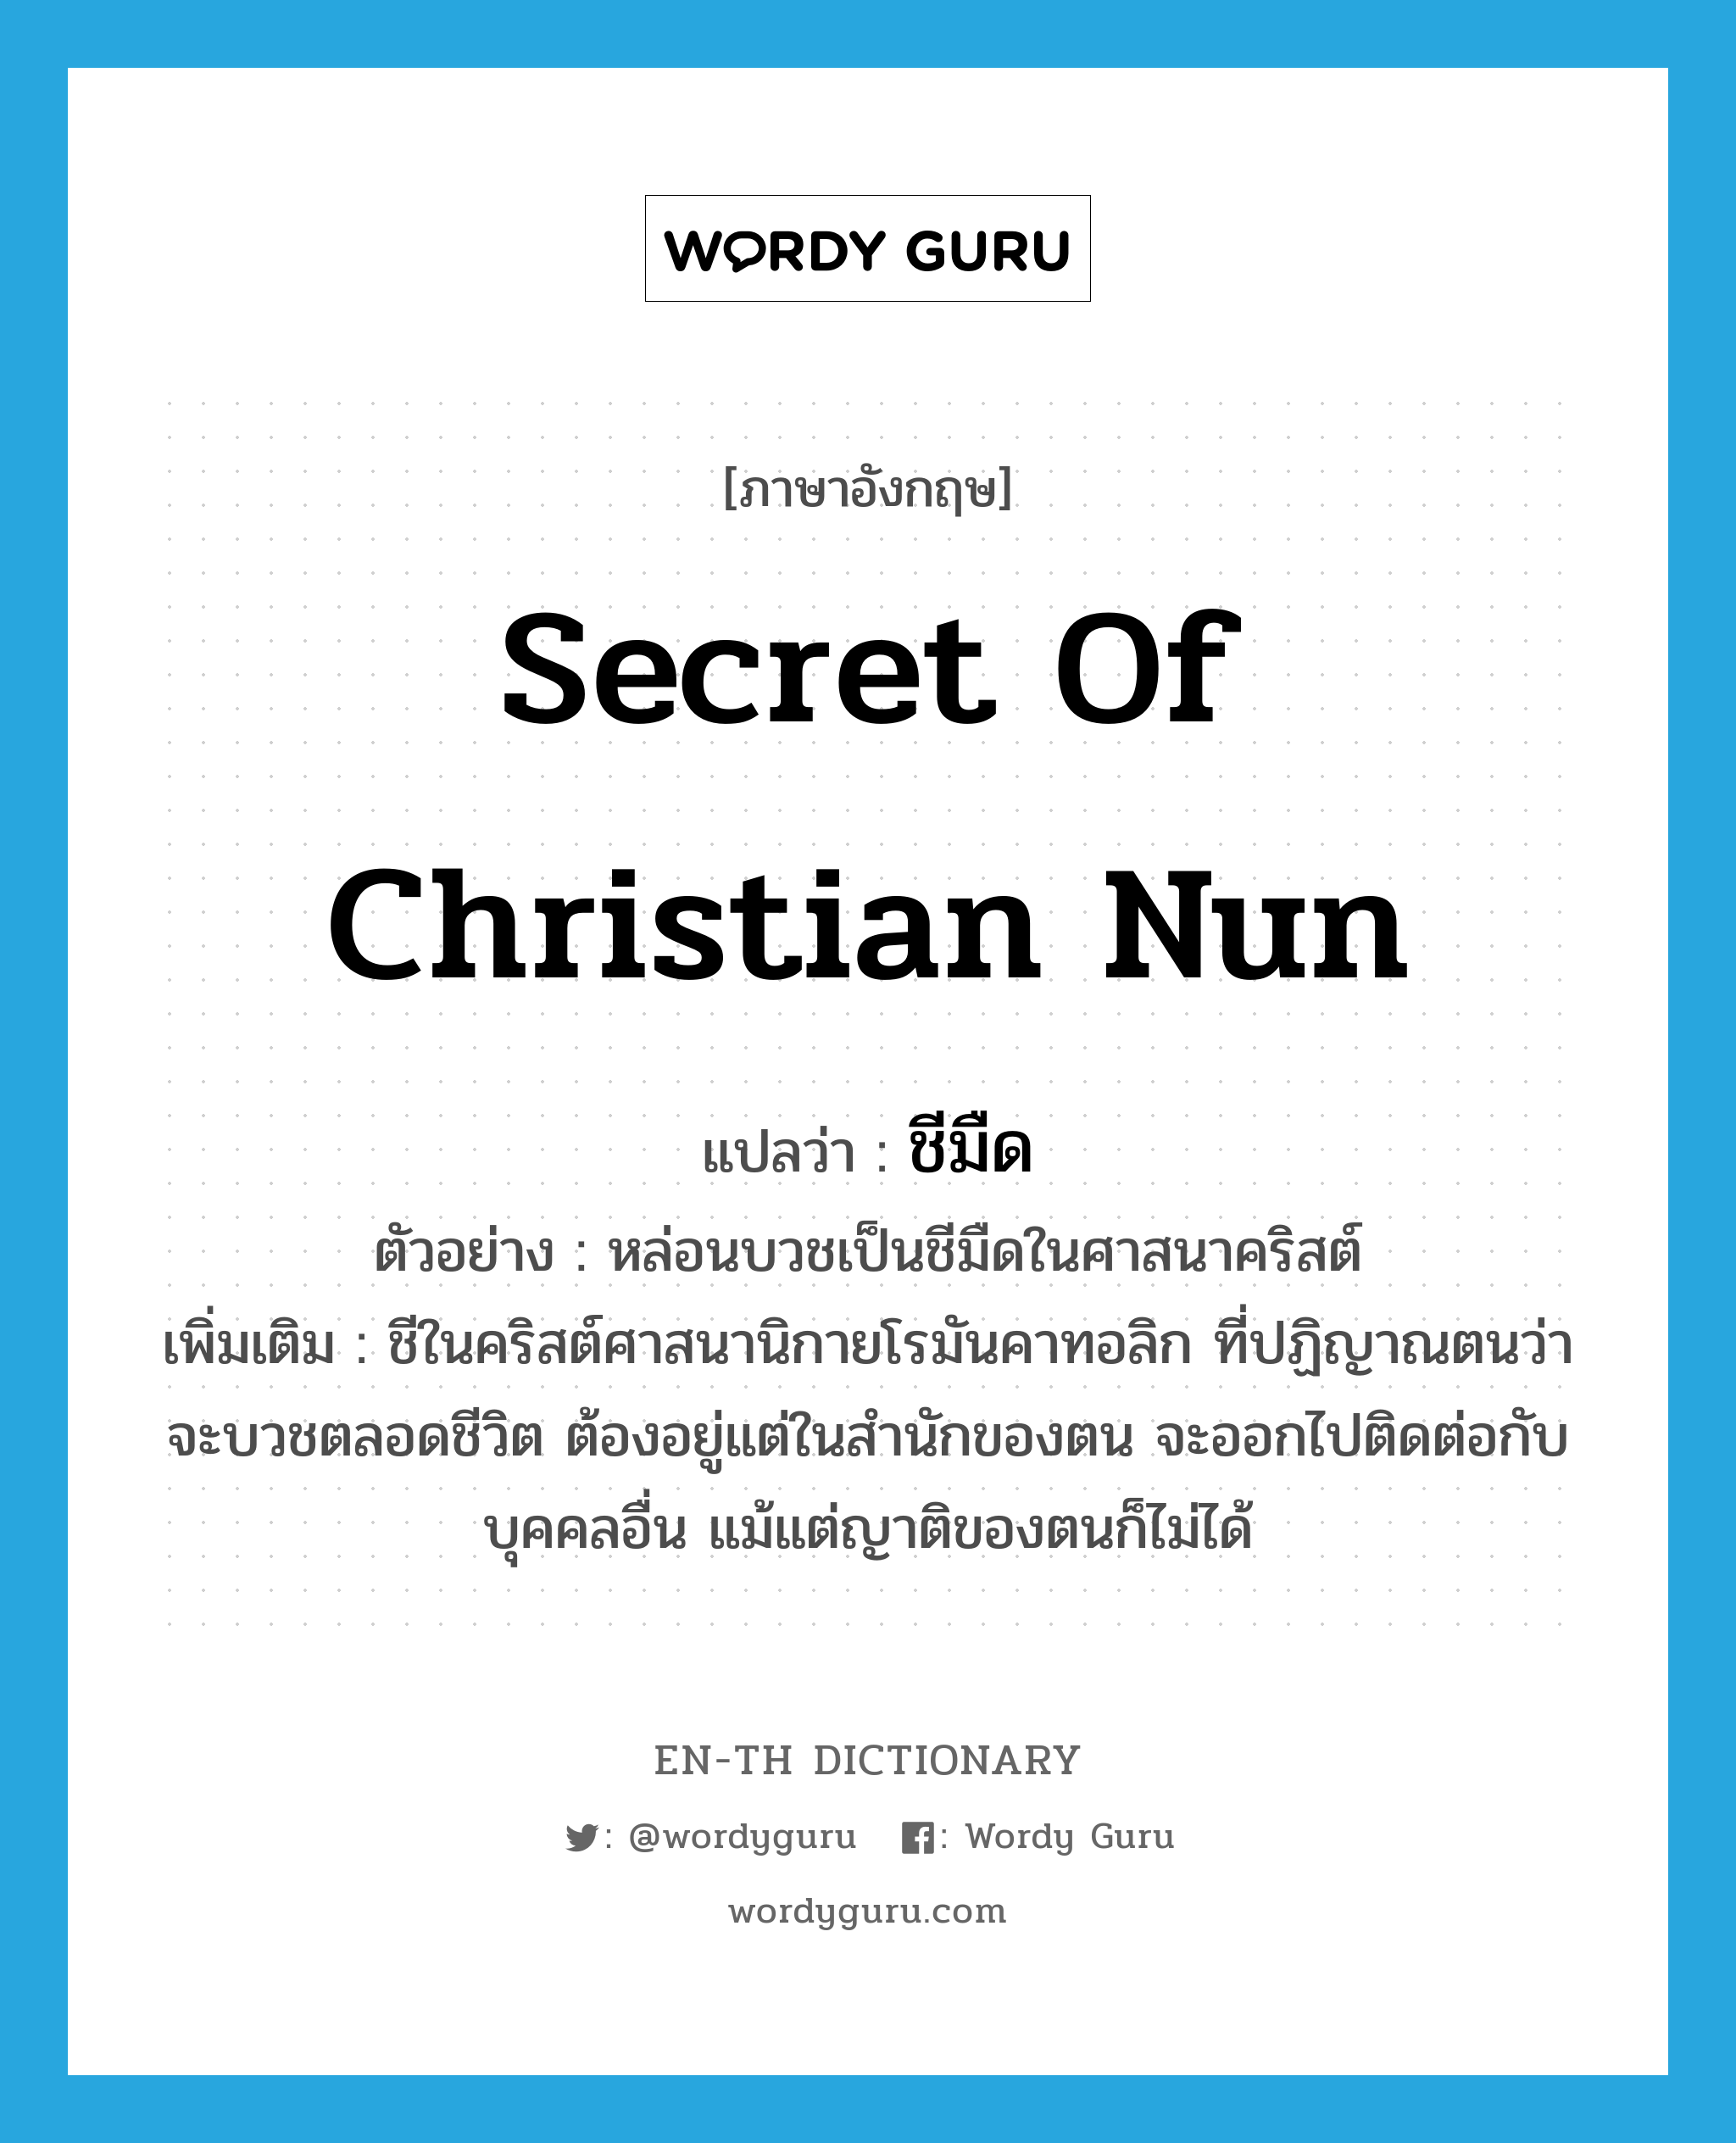 secret of Christian nun แปลว่า?, คำศัพท์ภาษาอังกฤษ secret of Christian nun แปลว่า ชีมืด ประเภท N ตัวอย่าง หล่อนบวชเป็นชีมืดในศาสนาคริสต์ เพิ่มเติม ชีในคริสต์ศาสนานิกายโรมันคาทอลิก ที่ปฏิญาณตนว่าจะบวชตลอดชีวิต ต้องอยู่แต่ในสำนักของตน จะออกไปติดต่อกับบุคคลอื่น แม้แต่ญาติของตนก็ไม่ได้ หมวด N